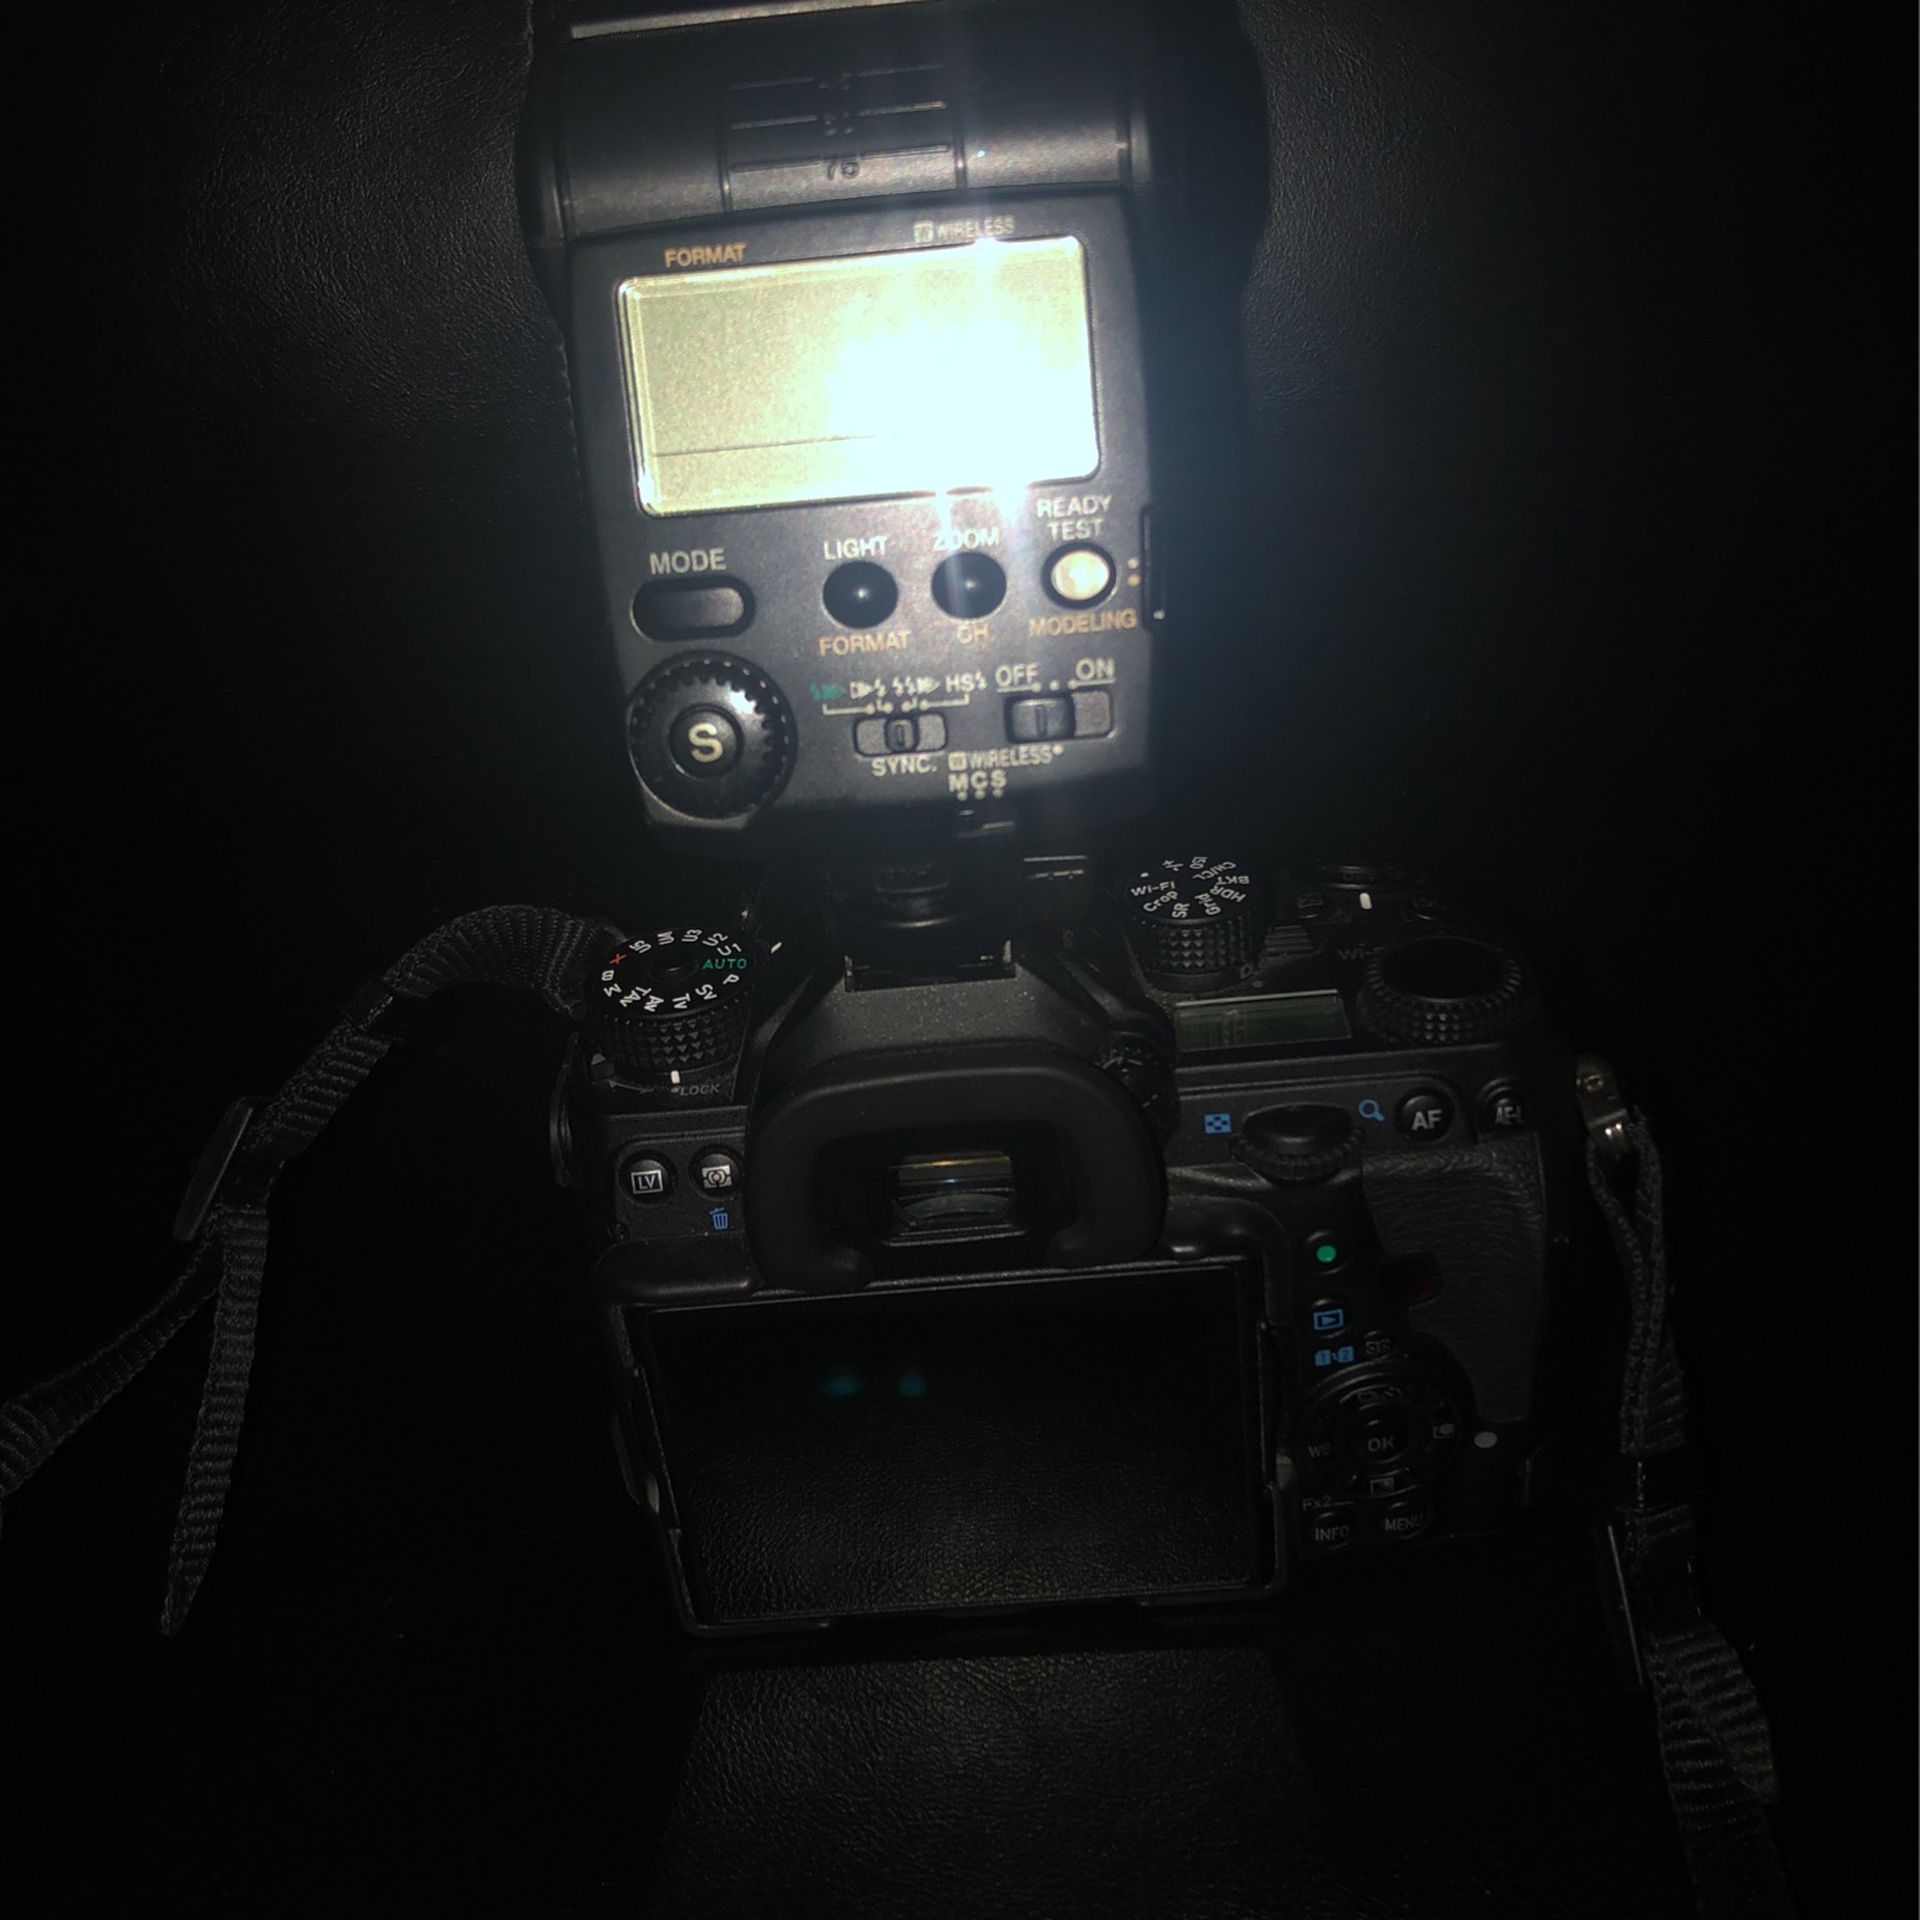 Pentax K-70 DSLR Camera With 18-135mm Lens (black) Come Wit Extra Lens